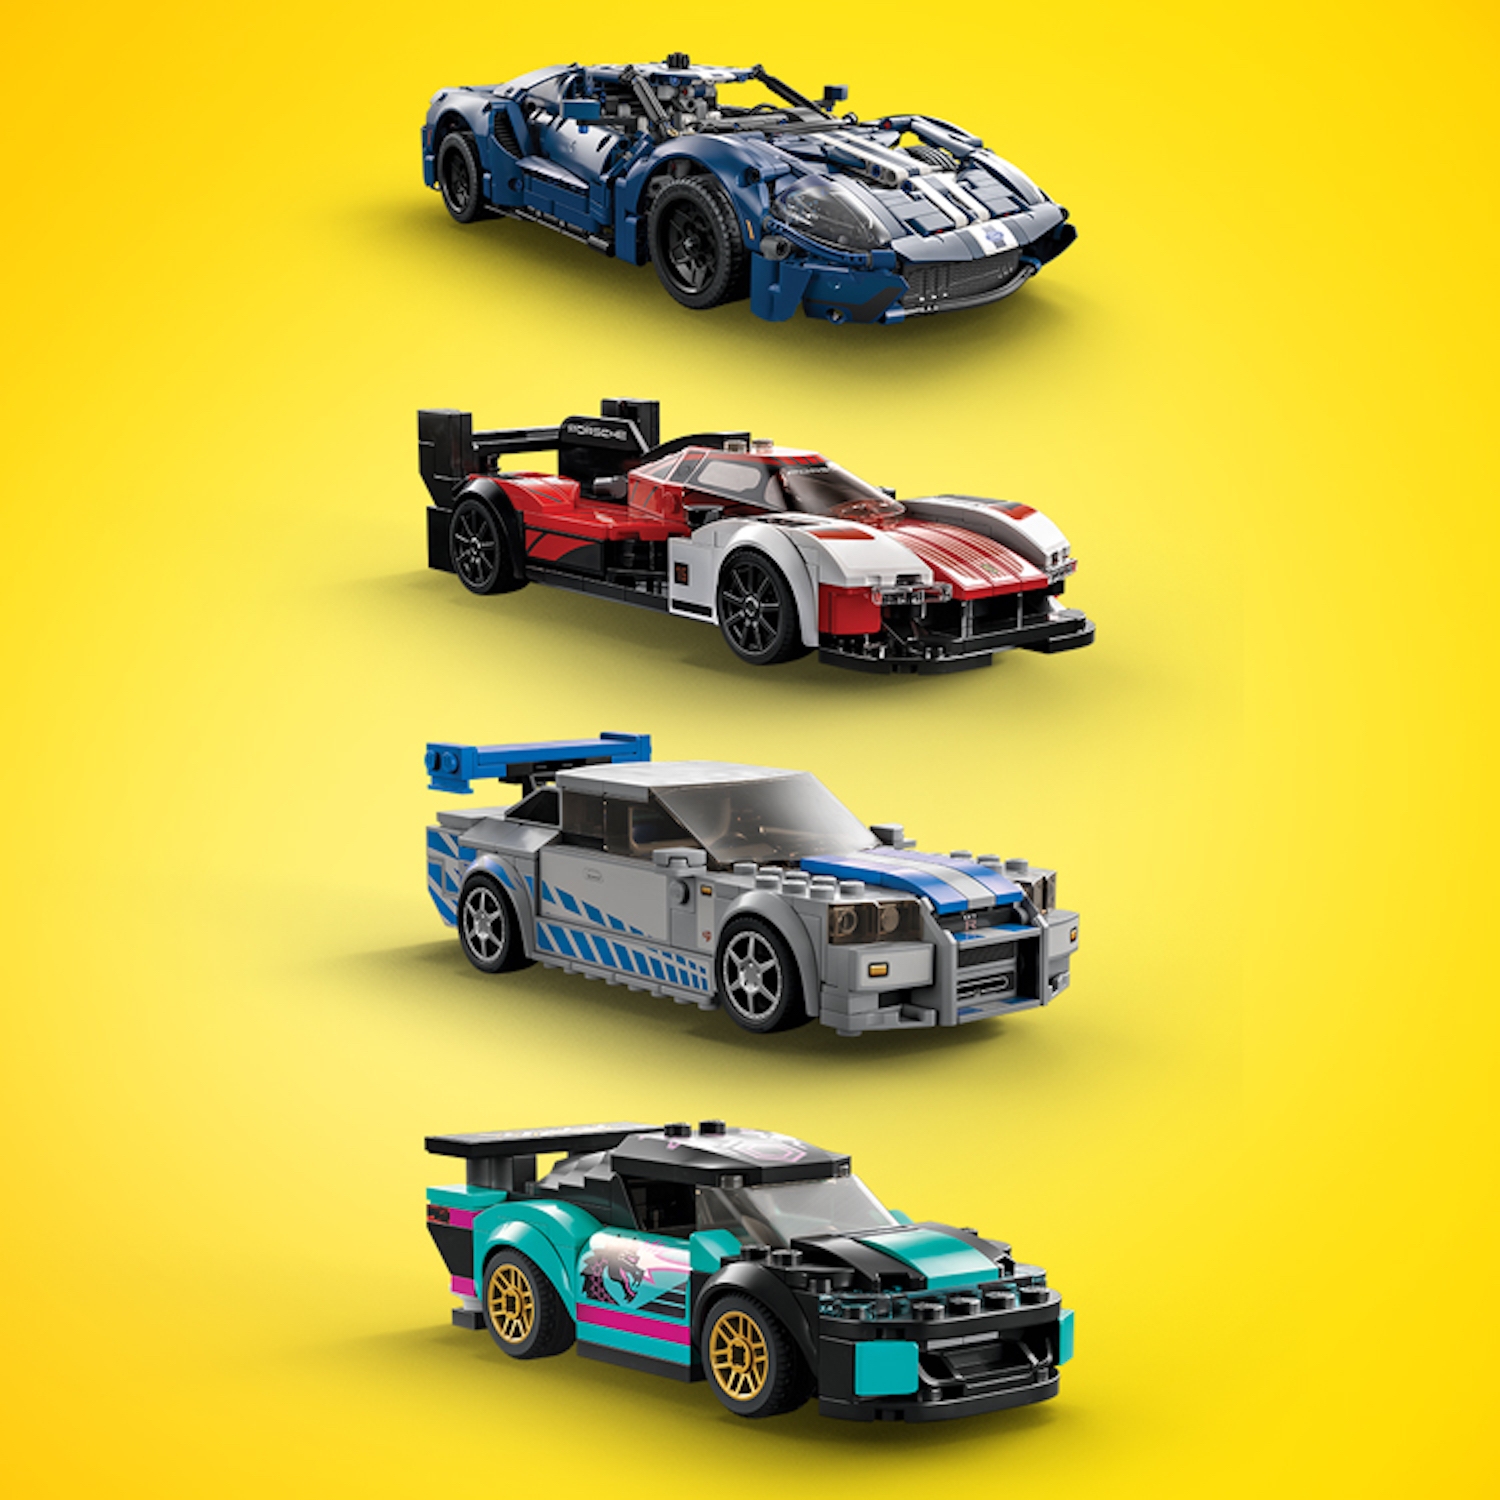 Les ensembles LEGO Technic prennent vie avec Dream Car Generator